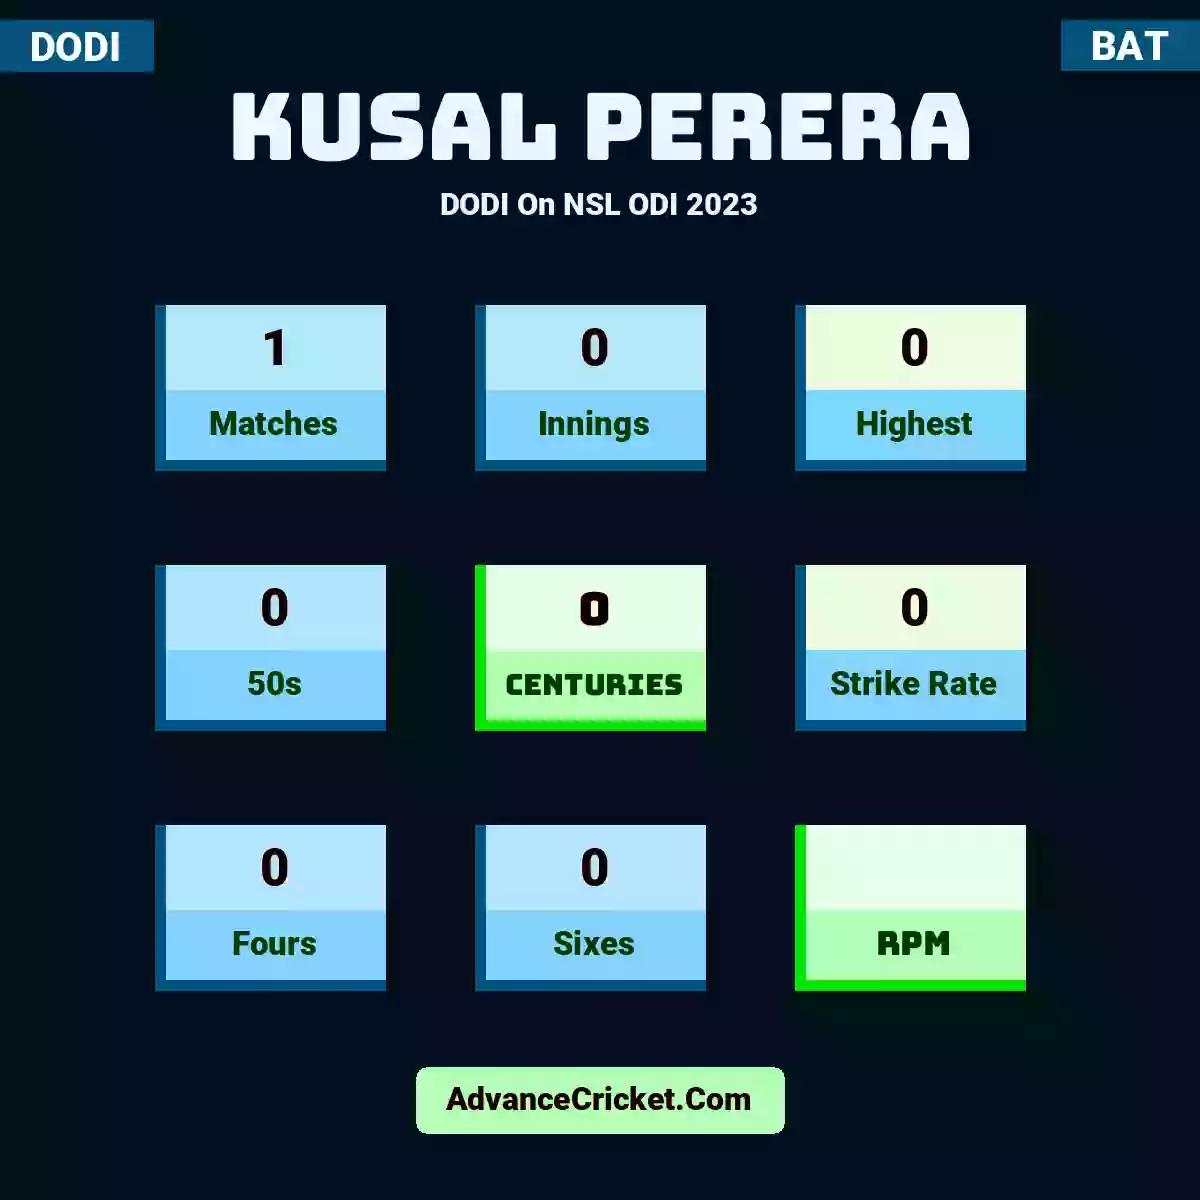 Kusal Perera DODI  On NSL ODI 2023, Kusal Perera played 1 matches, scored 0 runs as highest, 0 half-centuries, and 0 centuries, with a strike rate of 0. K.Perera hit 0 fours and 0 sixes.